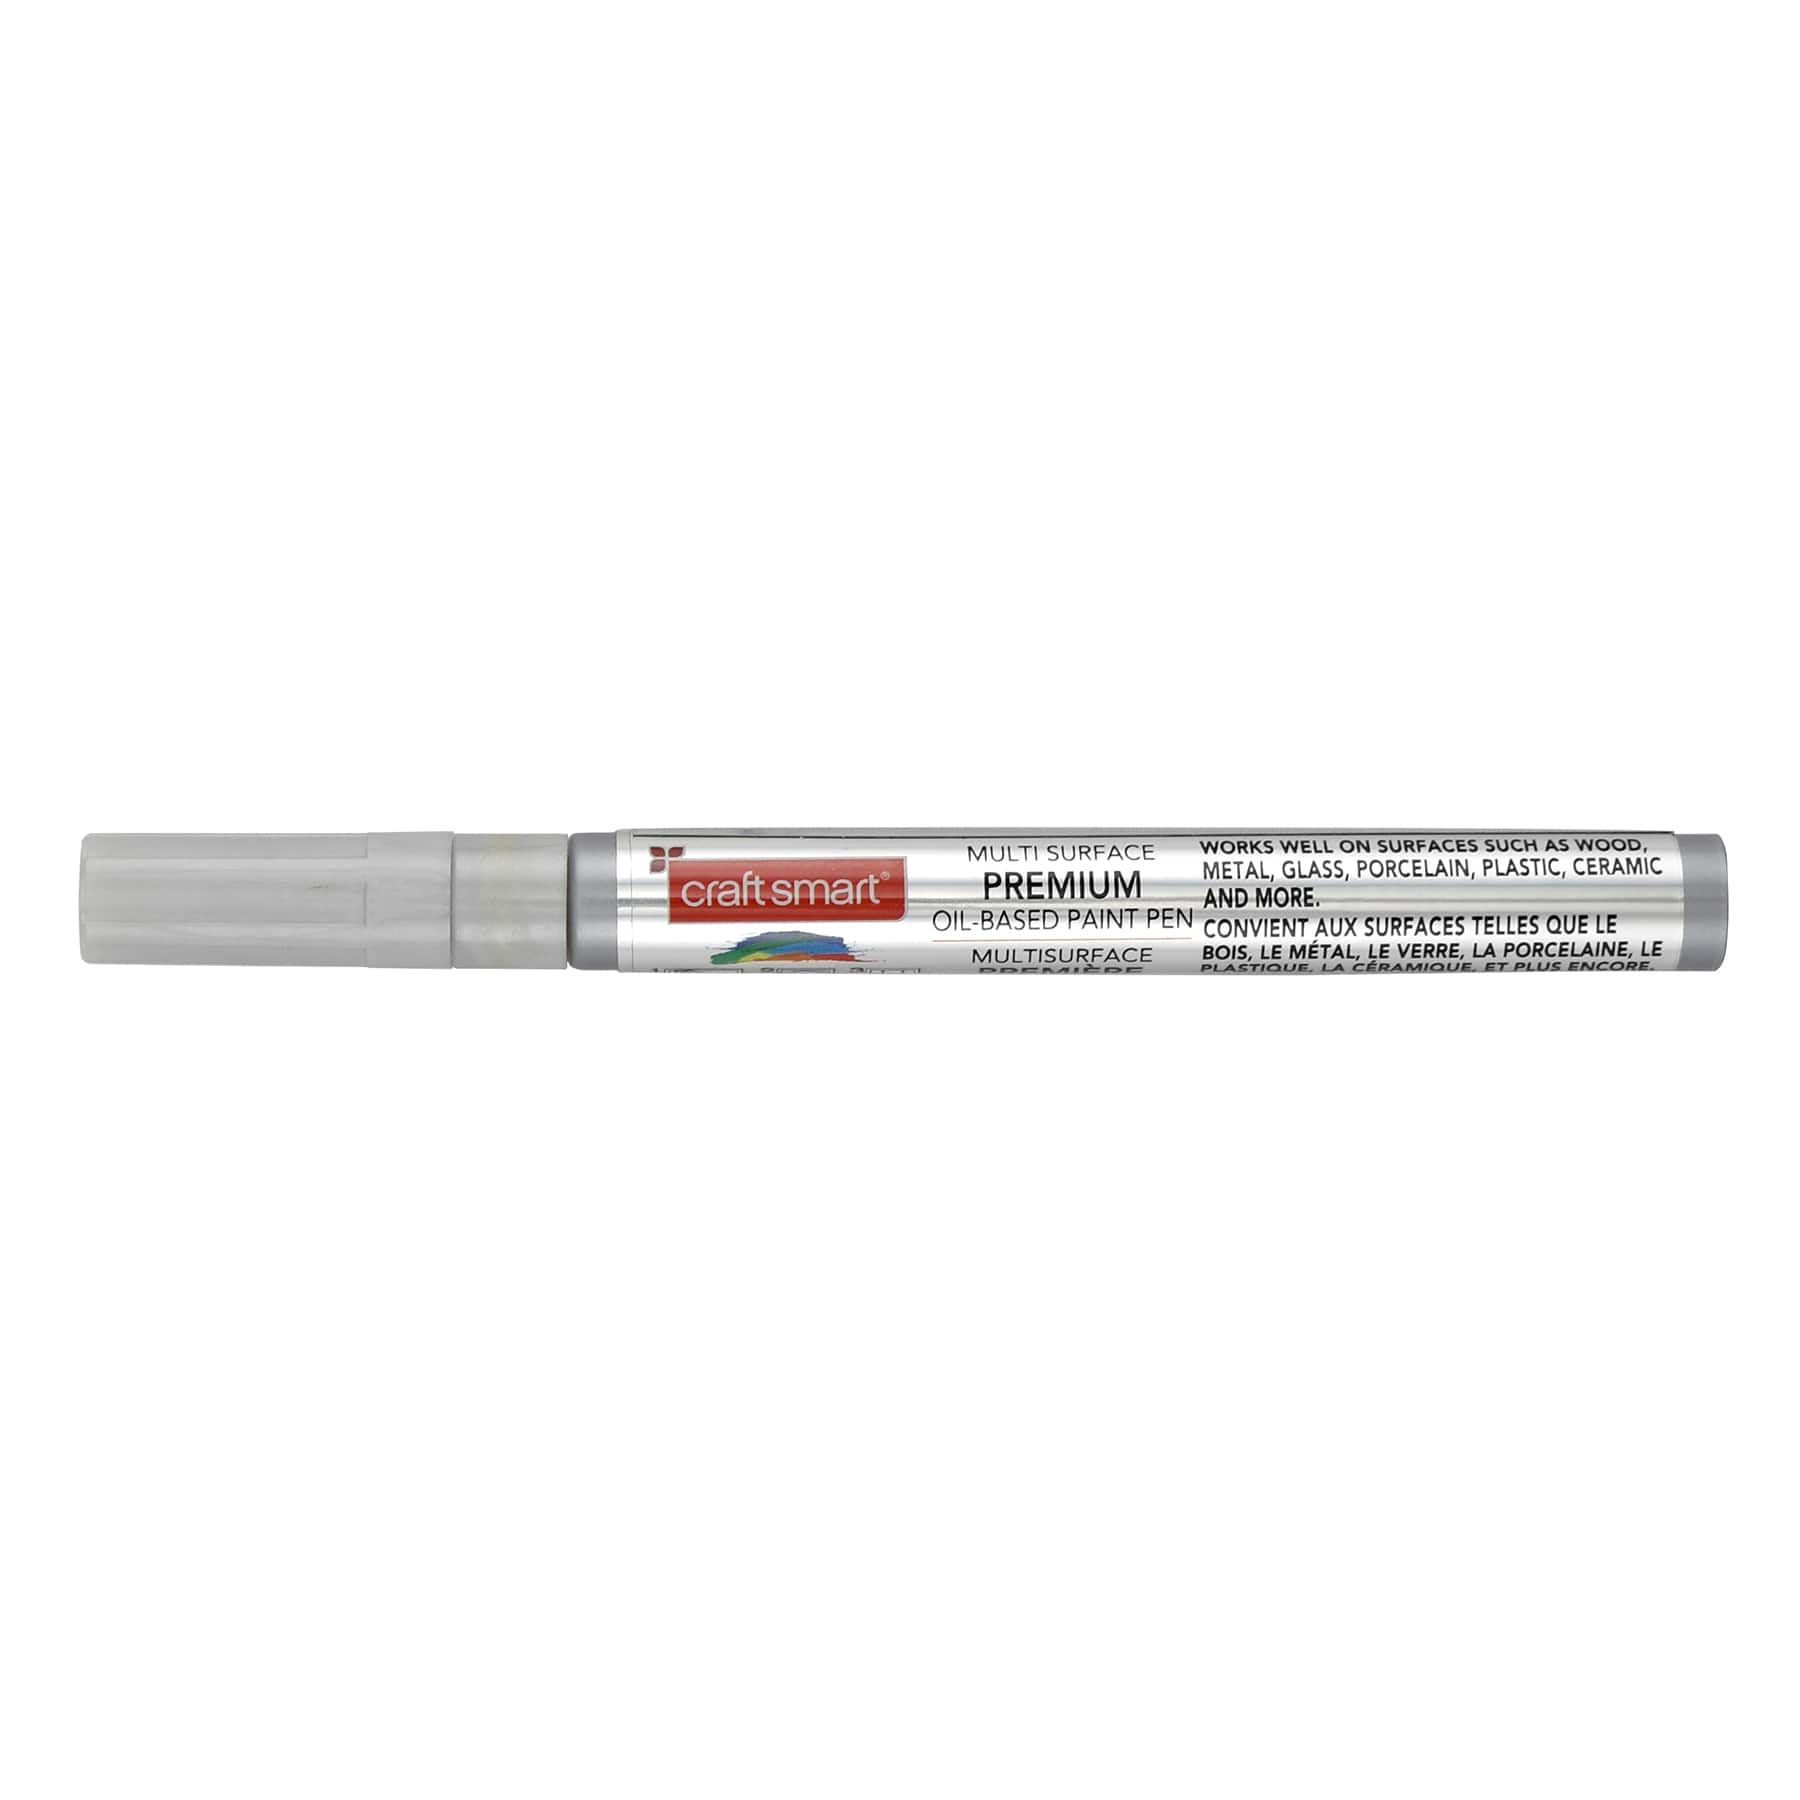 PINTAR Premium Oil Paint Pens - (24-Pack) 20 Medium Tip(5mm) & 4 Fine  Tip(1mm